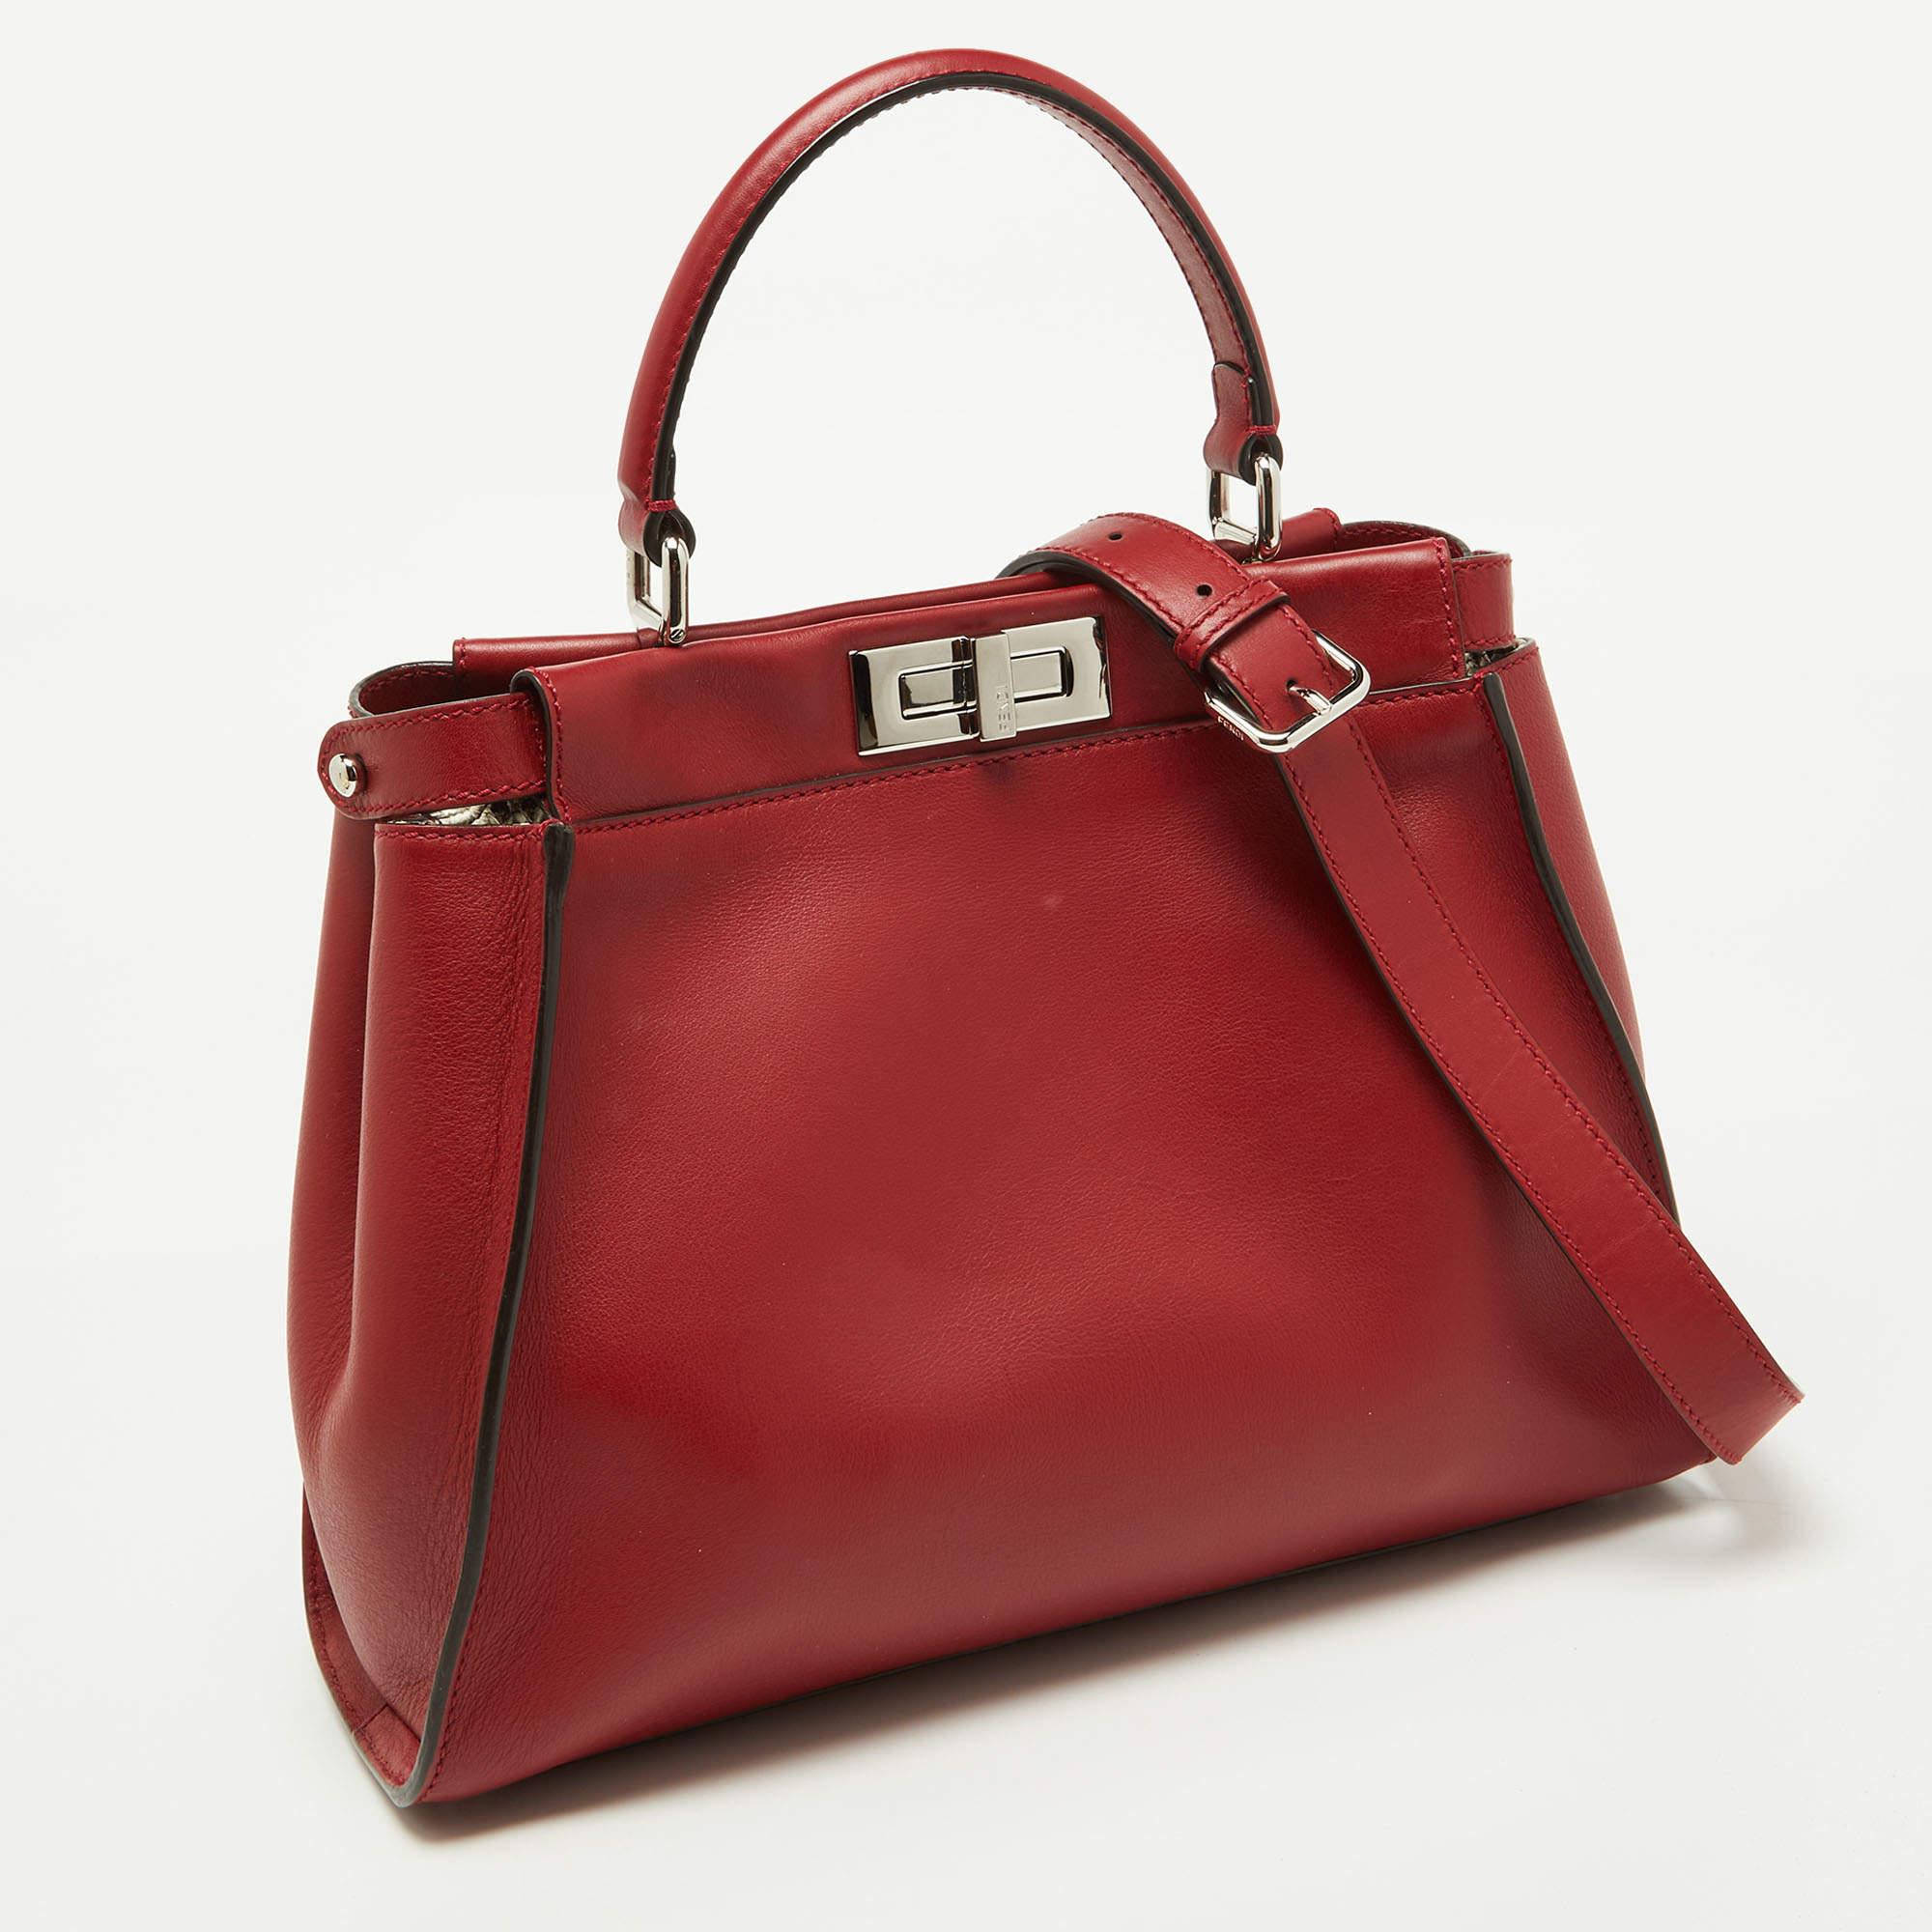 Fendi Red Leather Regular PeekabooTop Handle Bag In Excellent Condition For Sale In Dubai, Al Qouz 2